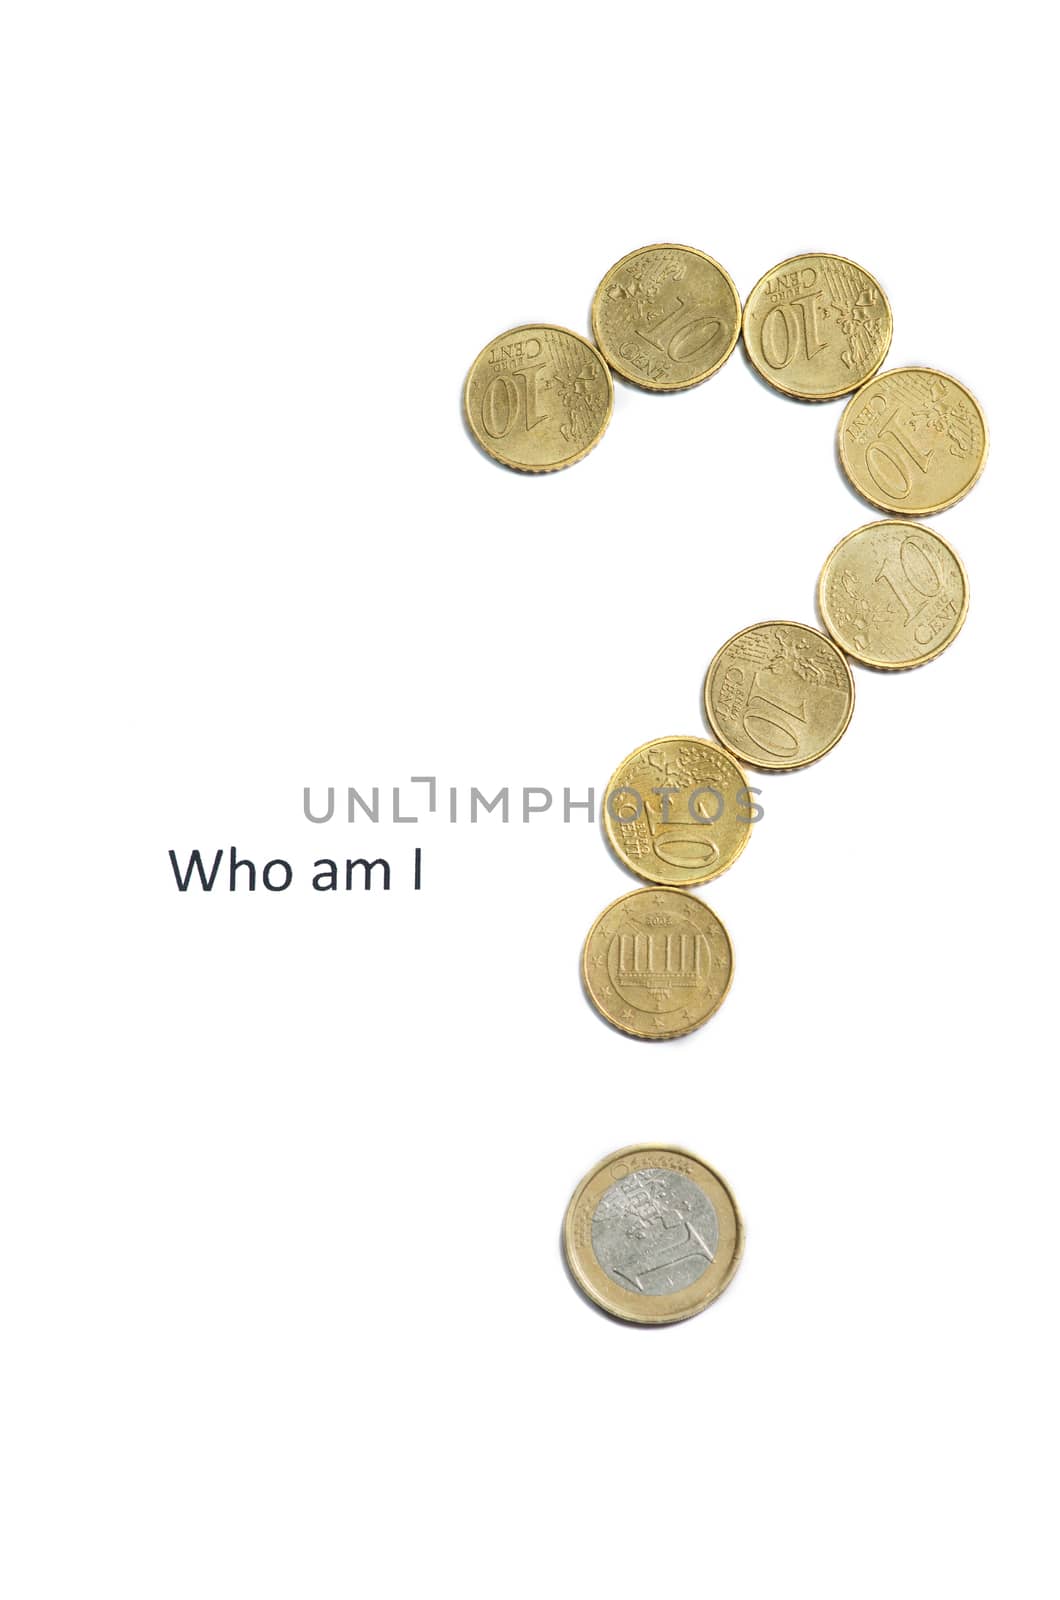 Who am I? by richpav